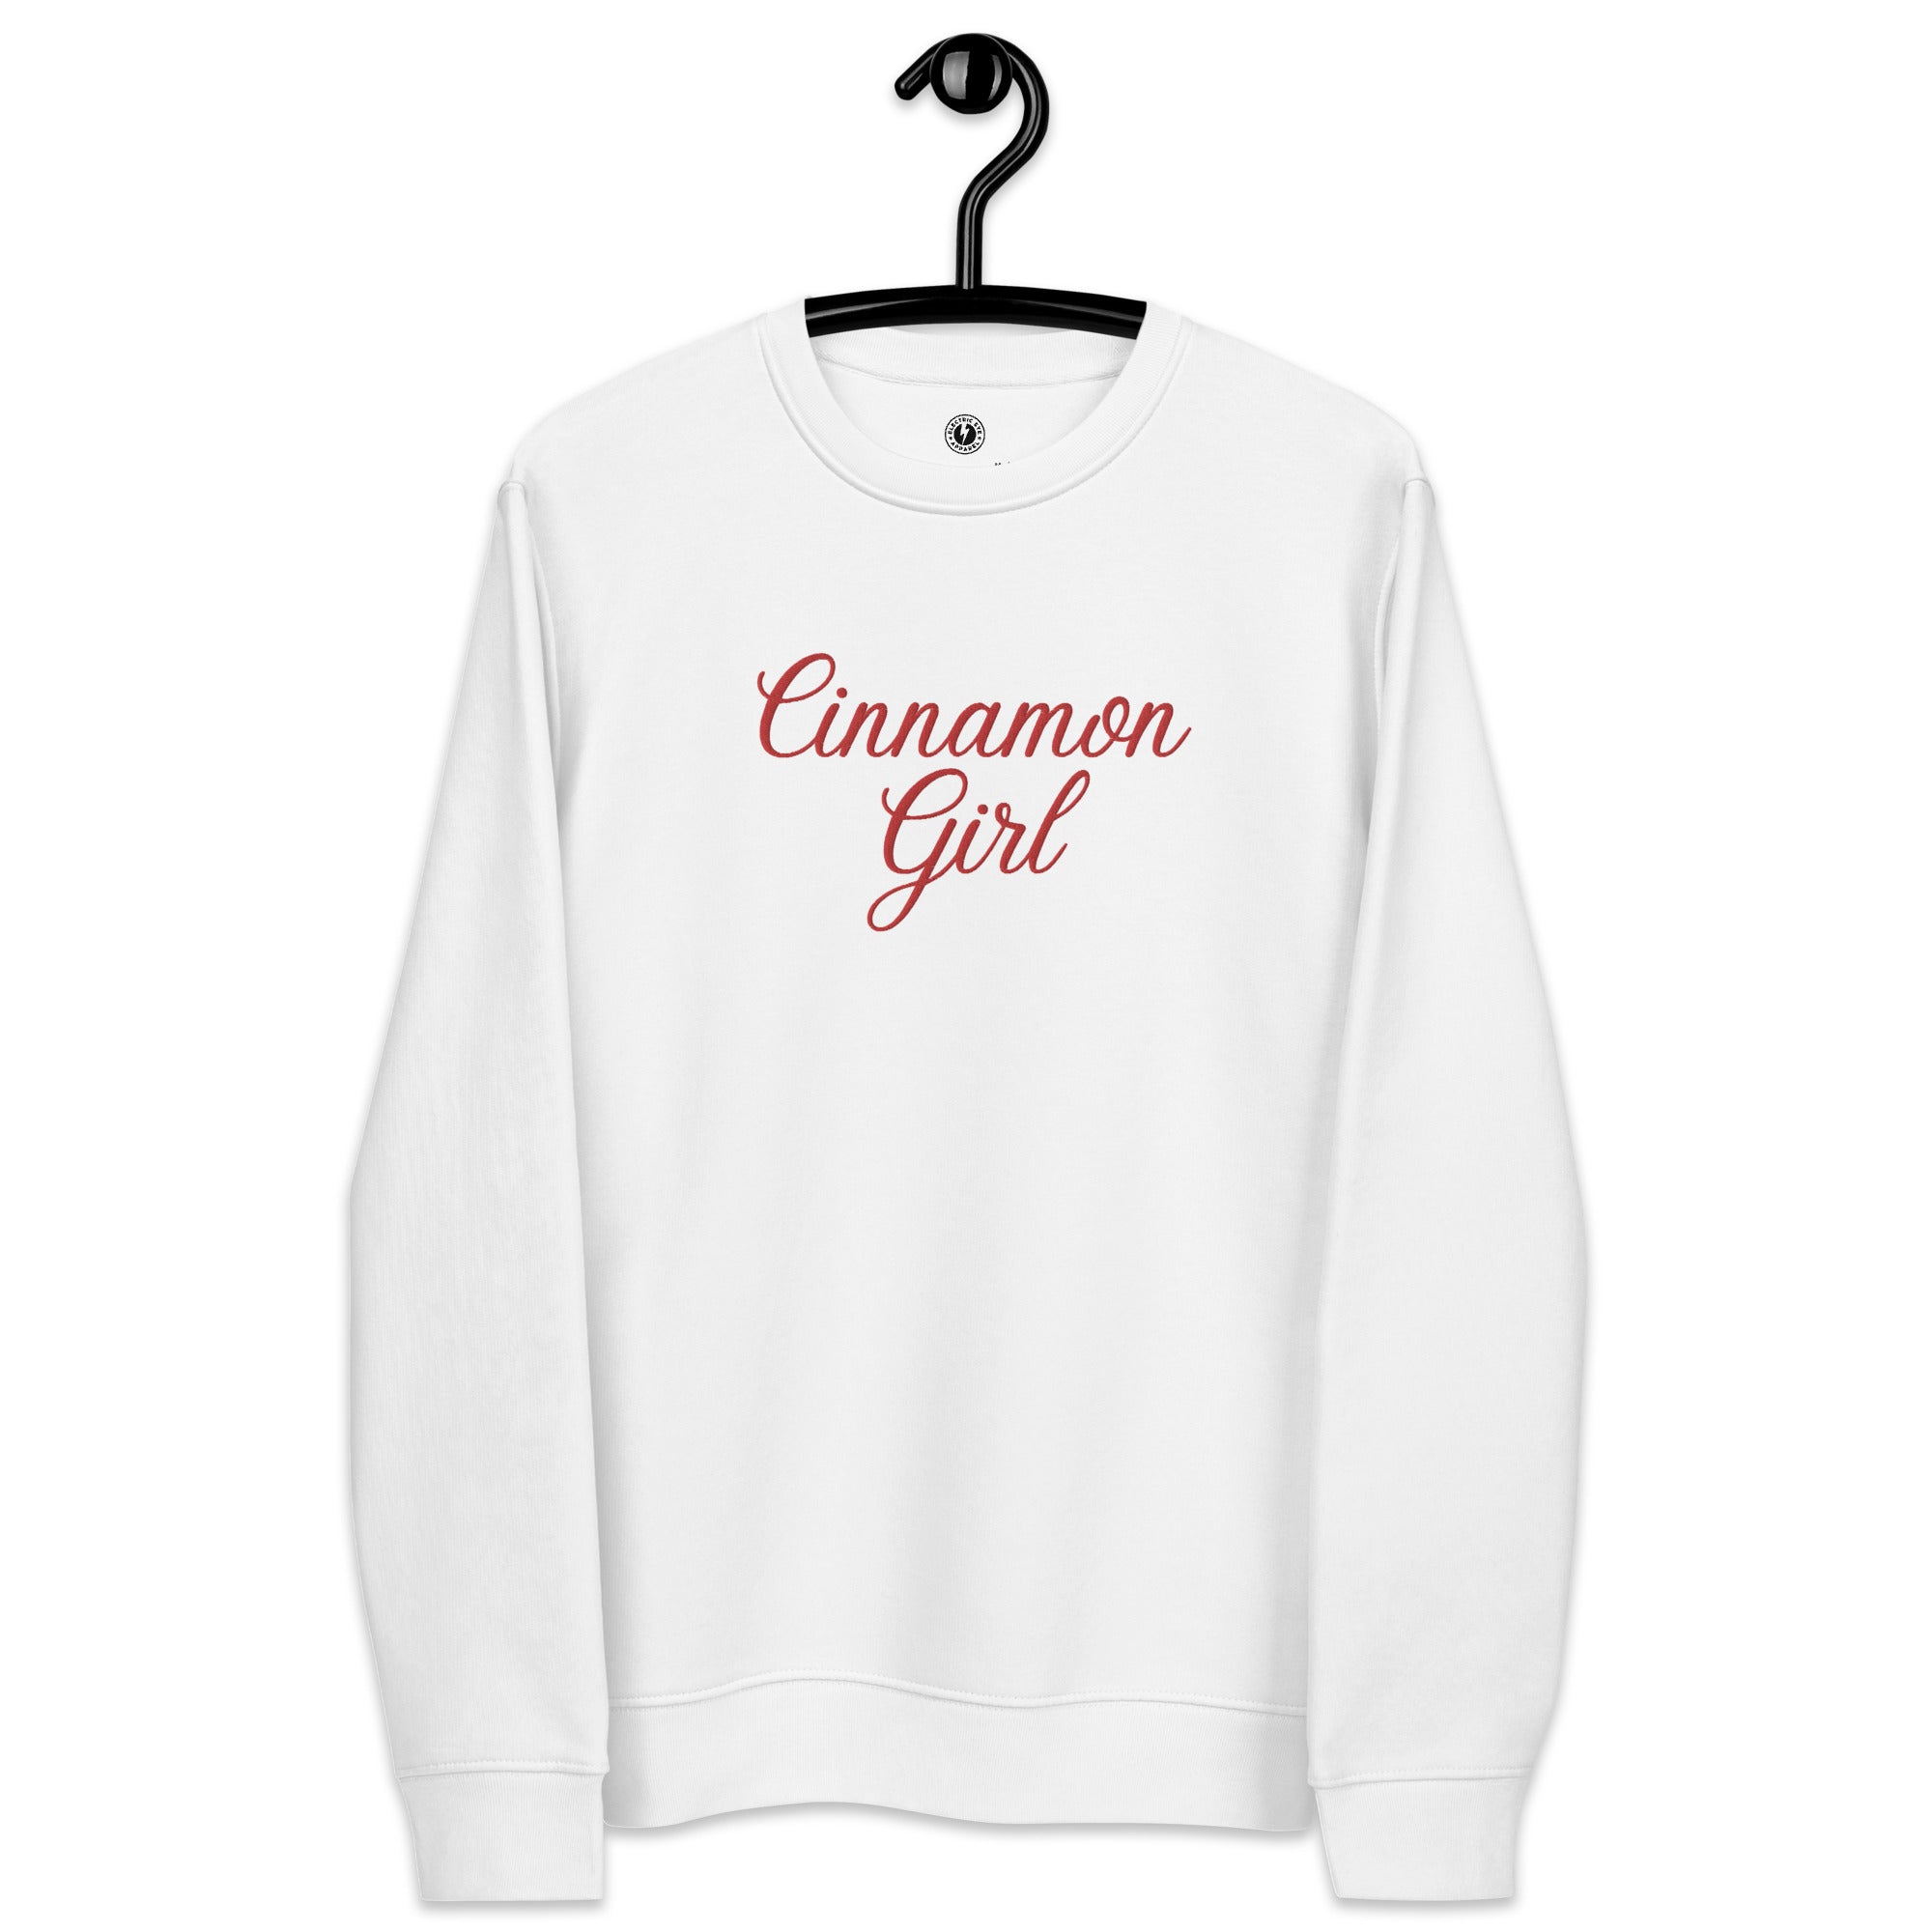 Cinnamon Girl - Premium Lana Lyric Embroidered Unisex Organic Sweatshirt - Red Thread